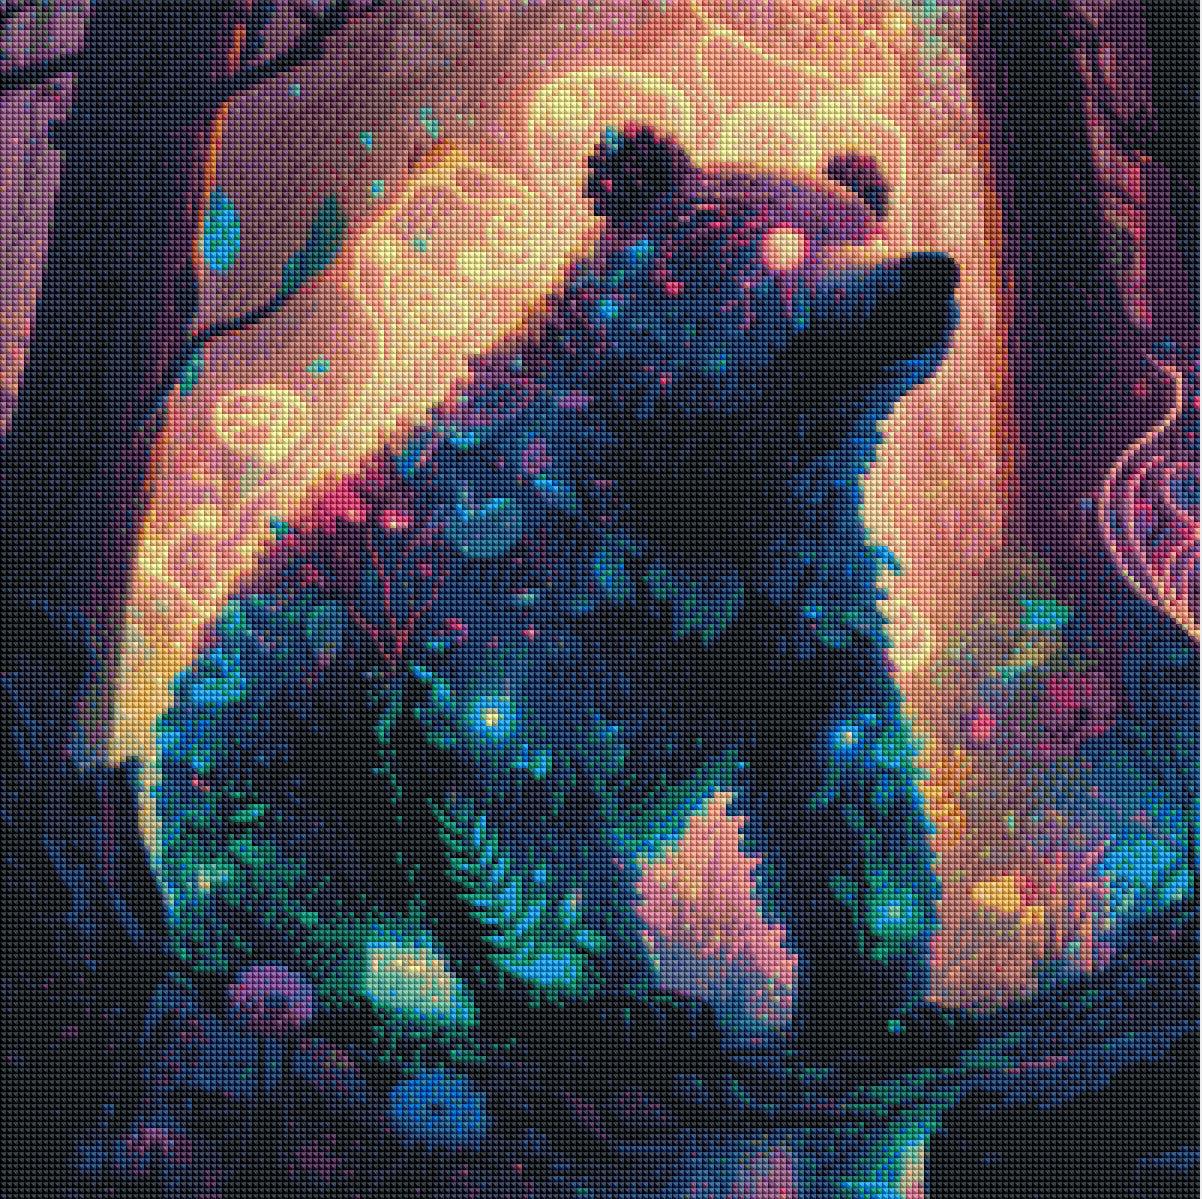 Enchanted Bear Adventure-Diamond Painting Kit-Heartful Diamonds